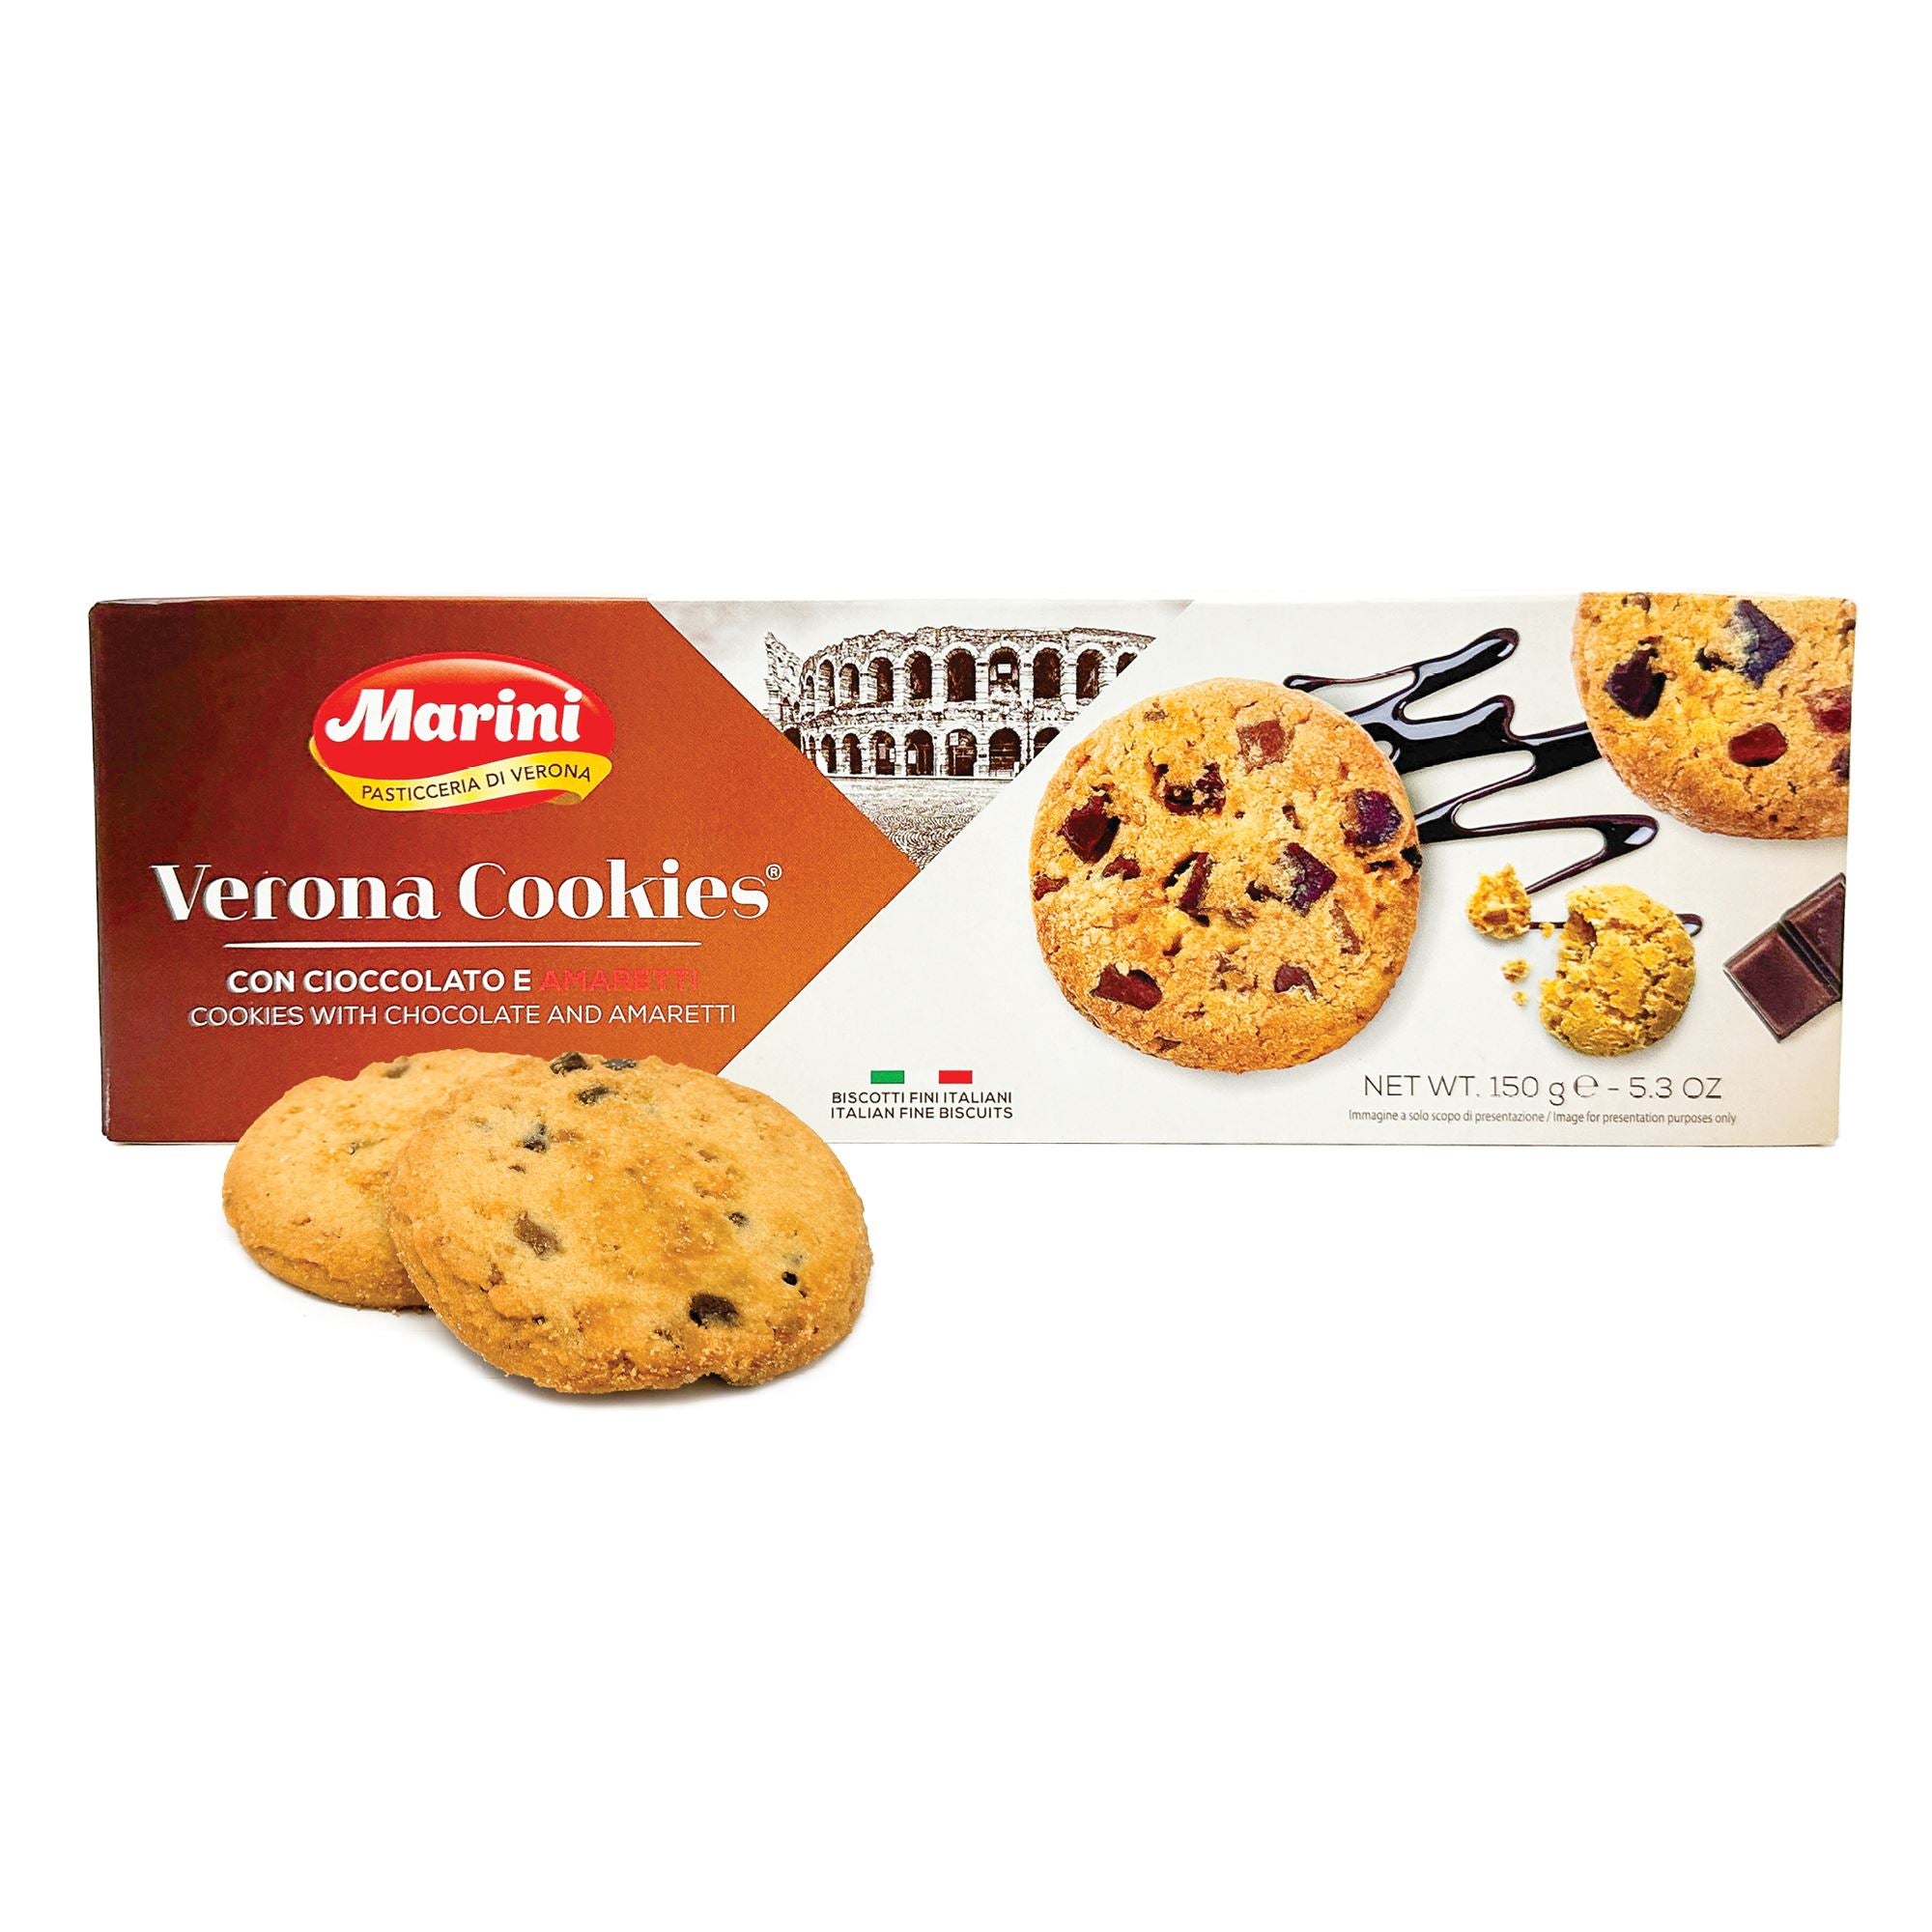 Verona cookies with chocolate & Amaretti - Marini Crakers & Sweetes Sogno Toscano 